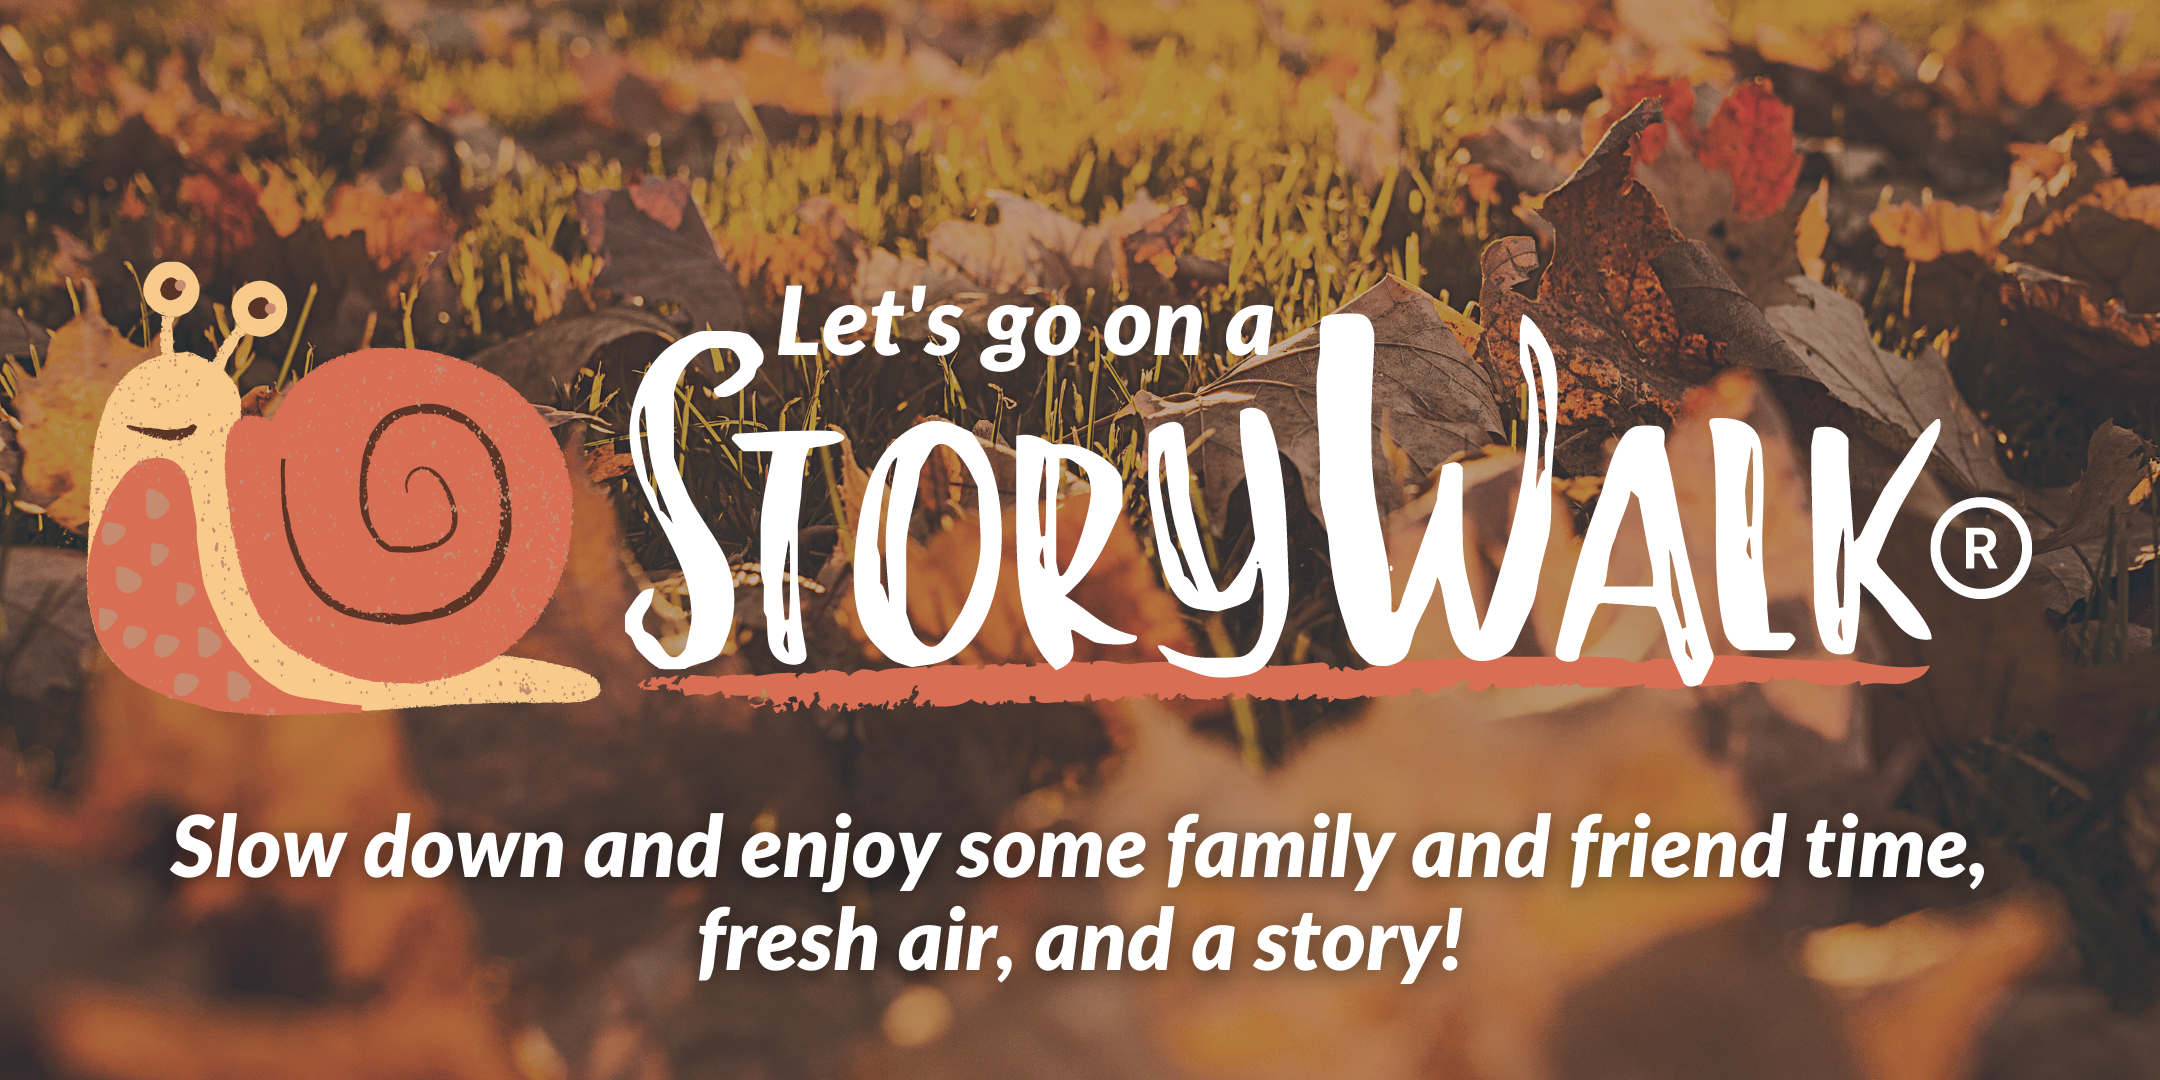 image of "StoryWalk"